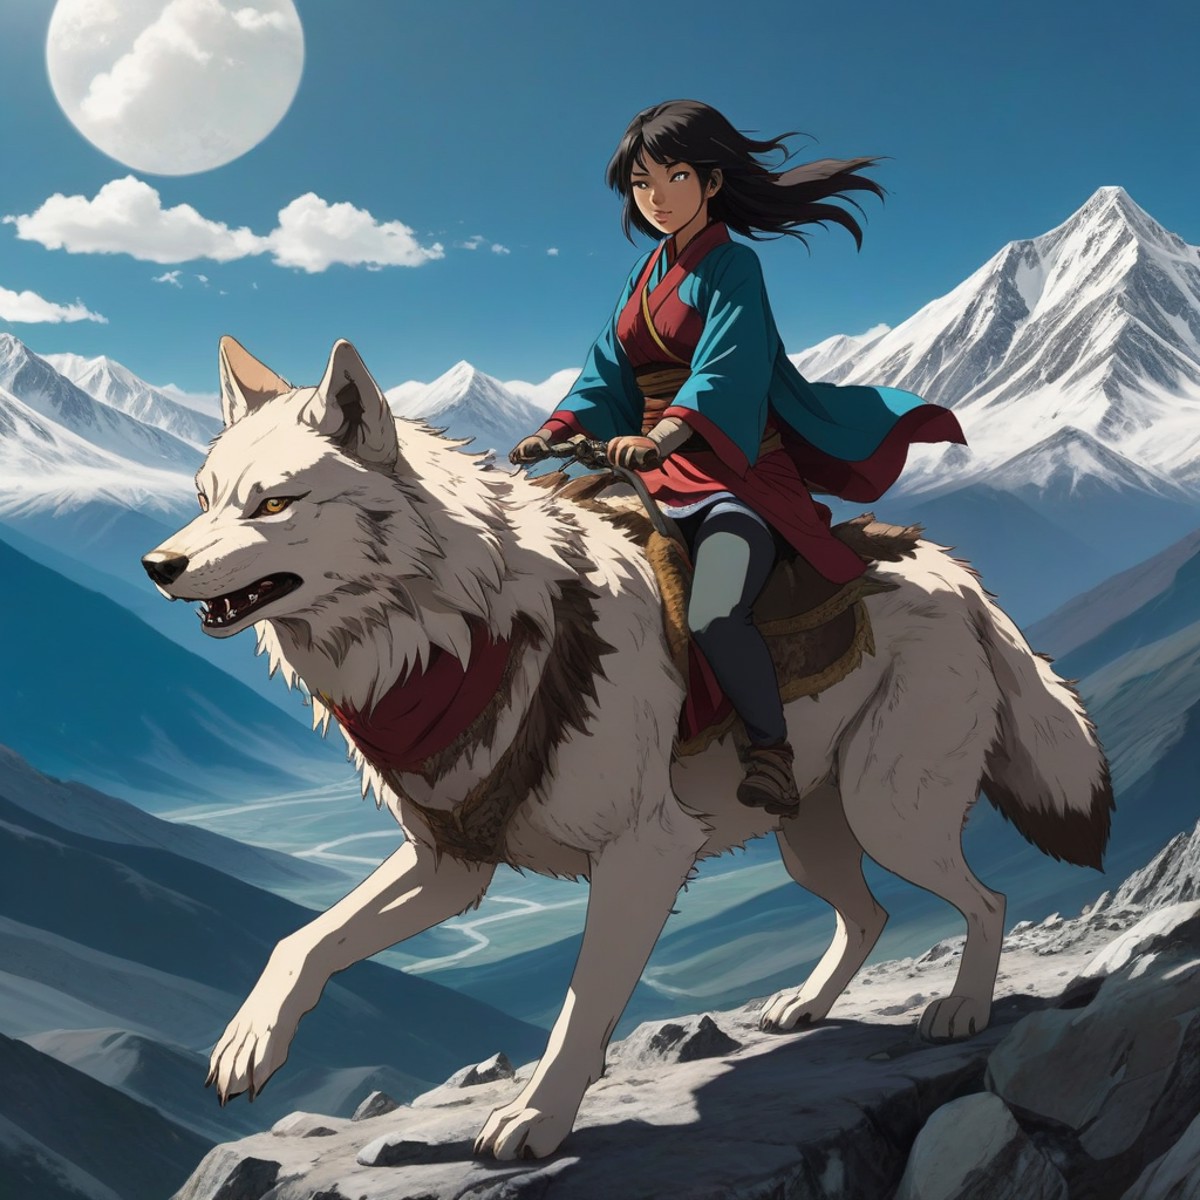 anime shot of a woman riding a wolf on tibetan mountains